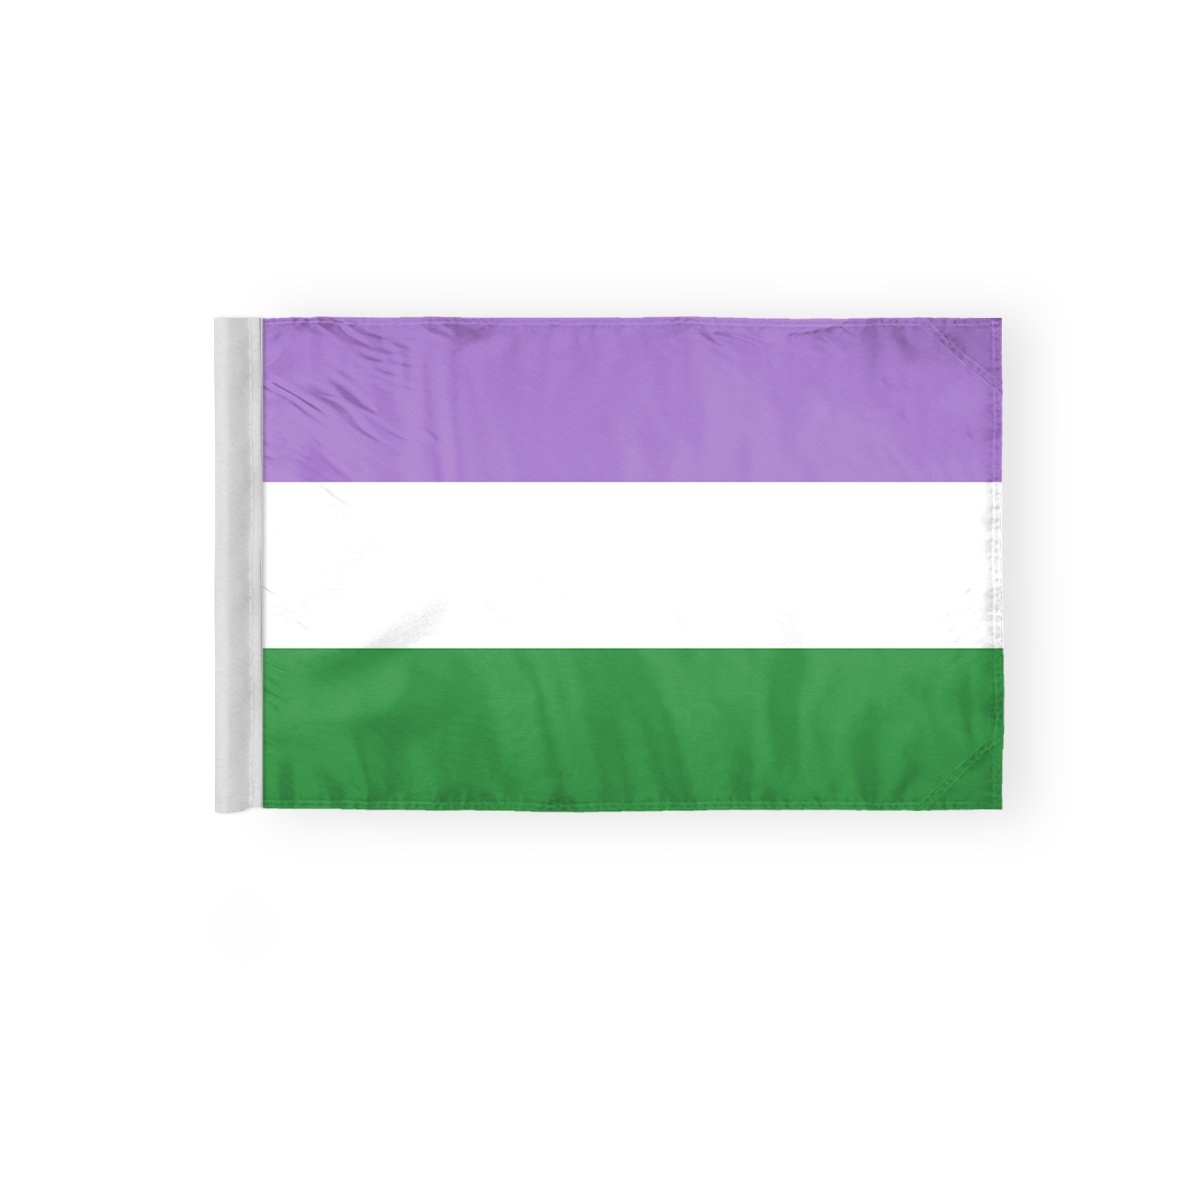 AGAS Genderqueer Pride Motorcycle Flag 6x9 inch